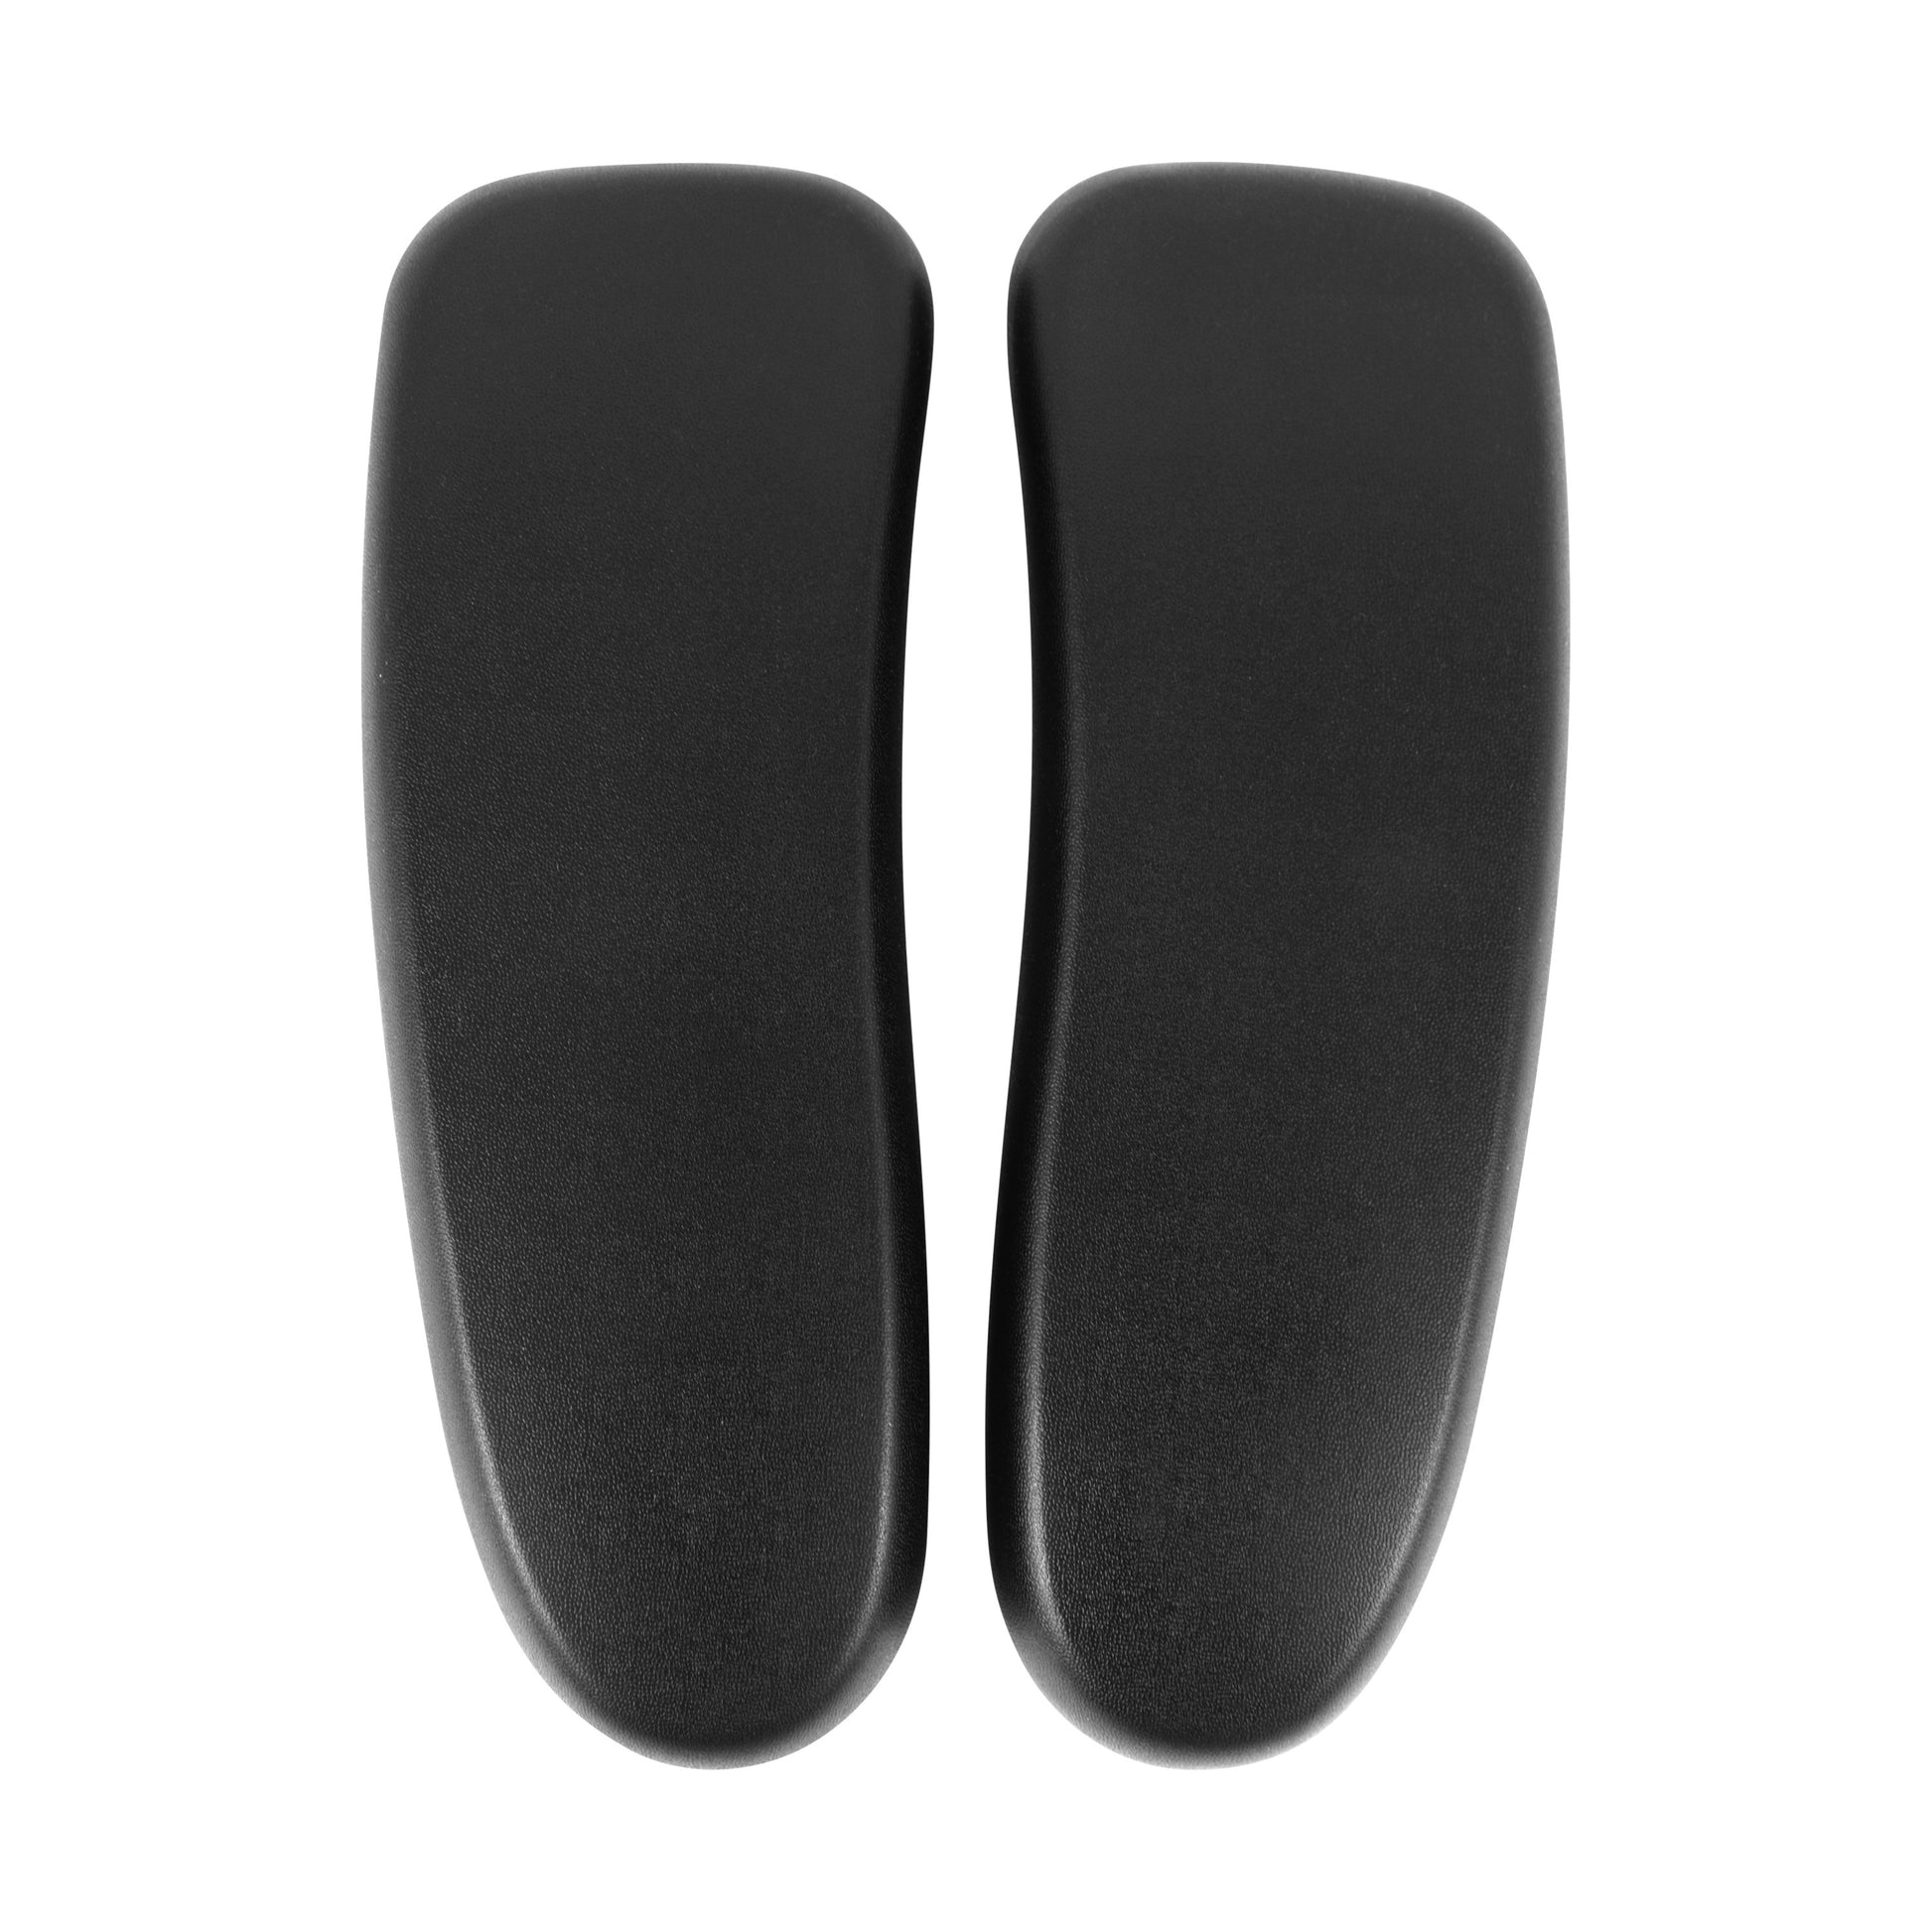 Arm pads for  Herman Miller Classic Aeron Chair - Pair - chairorama